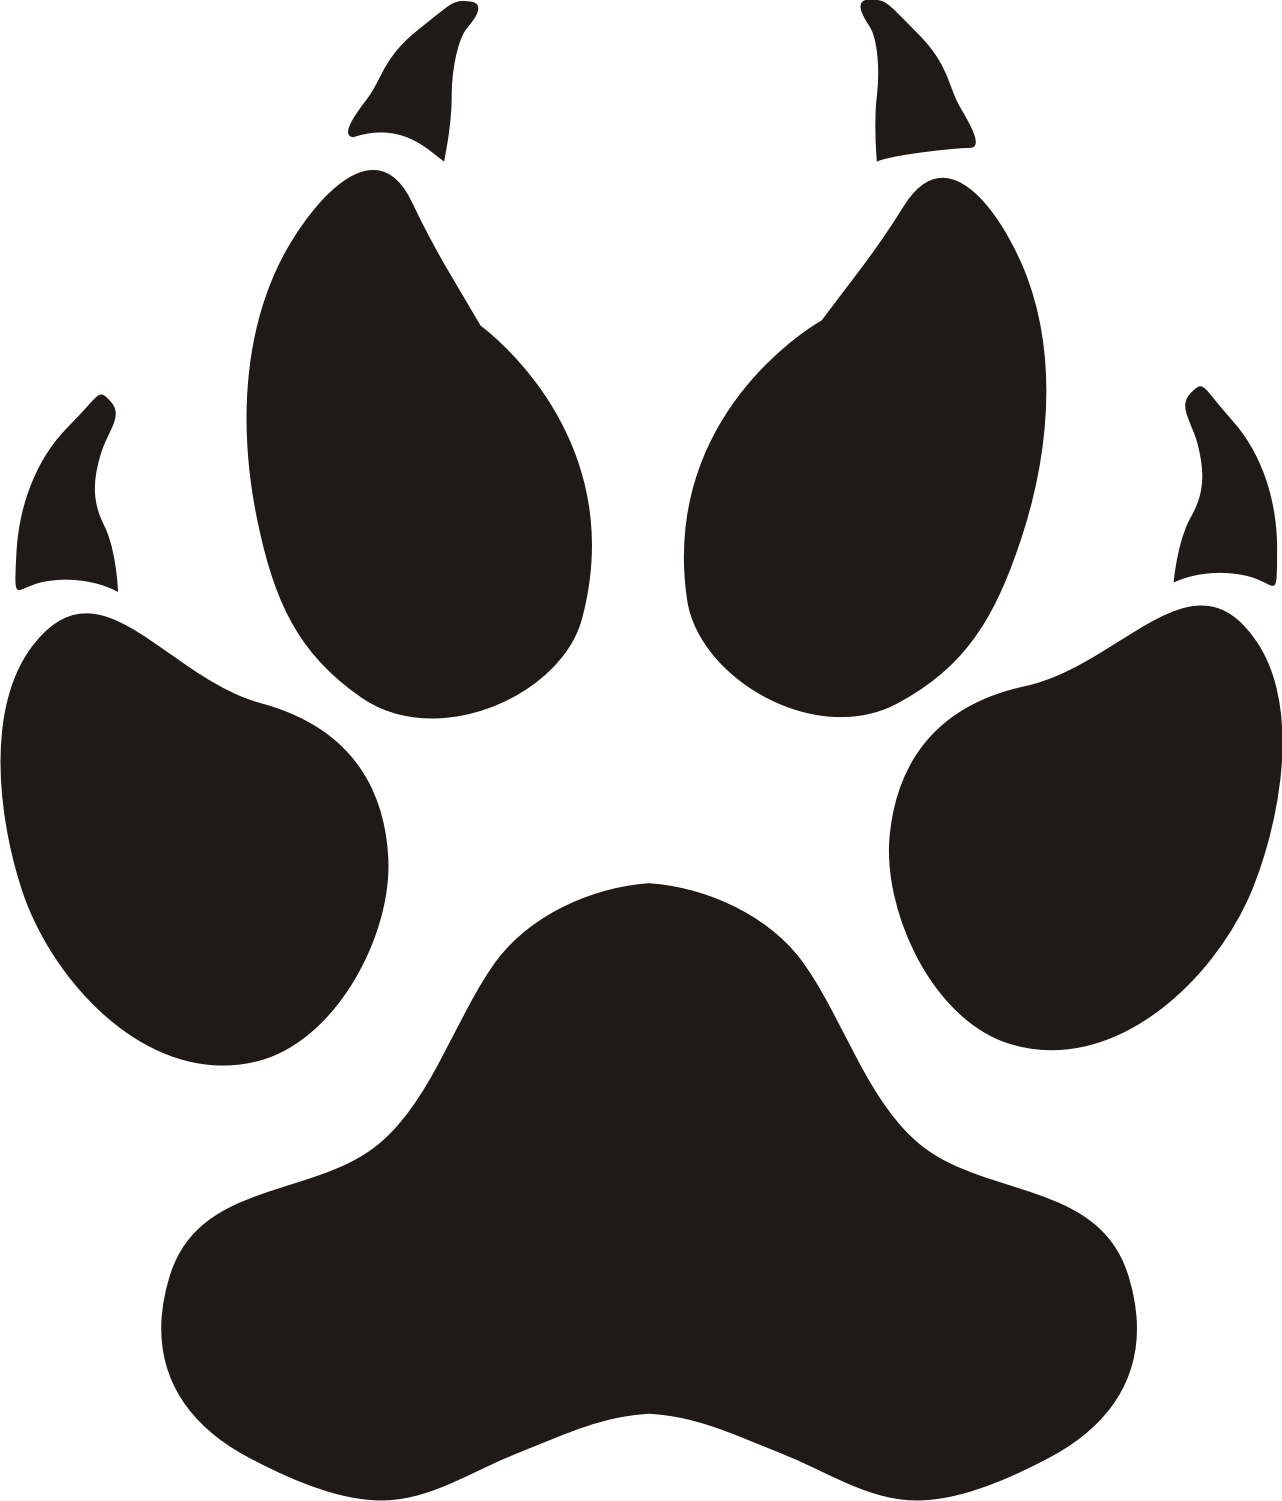 Black Paw Print Logo - Free Leopard Paw Prints, Download Free Clip Art, Free Clip Art on ...